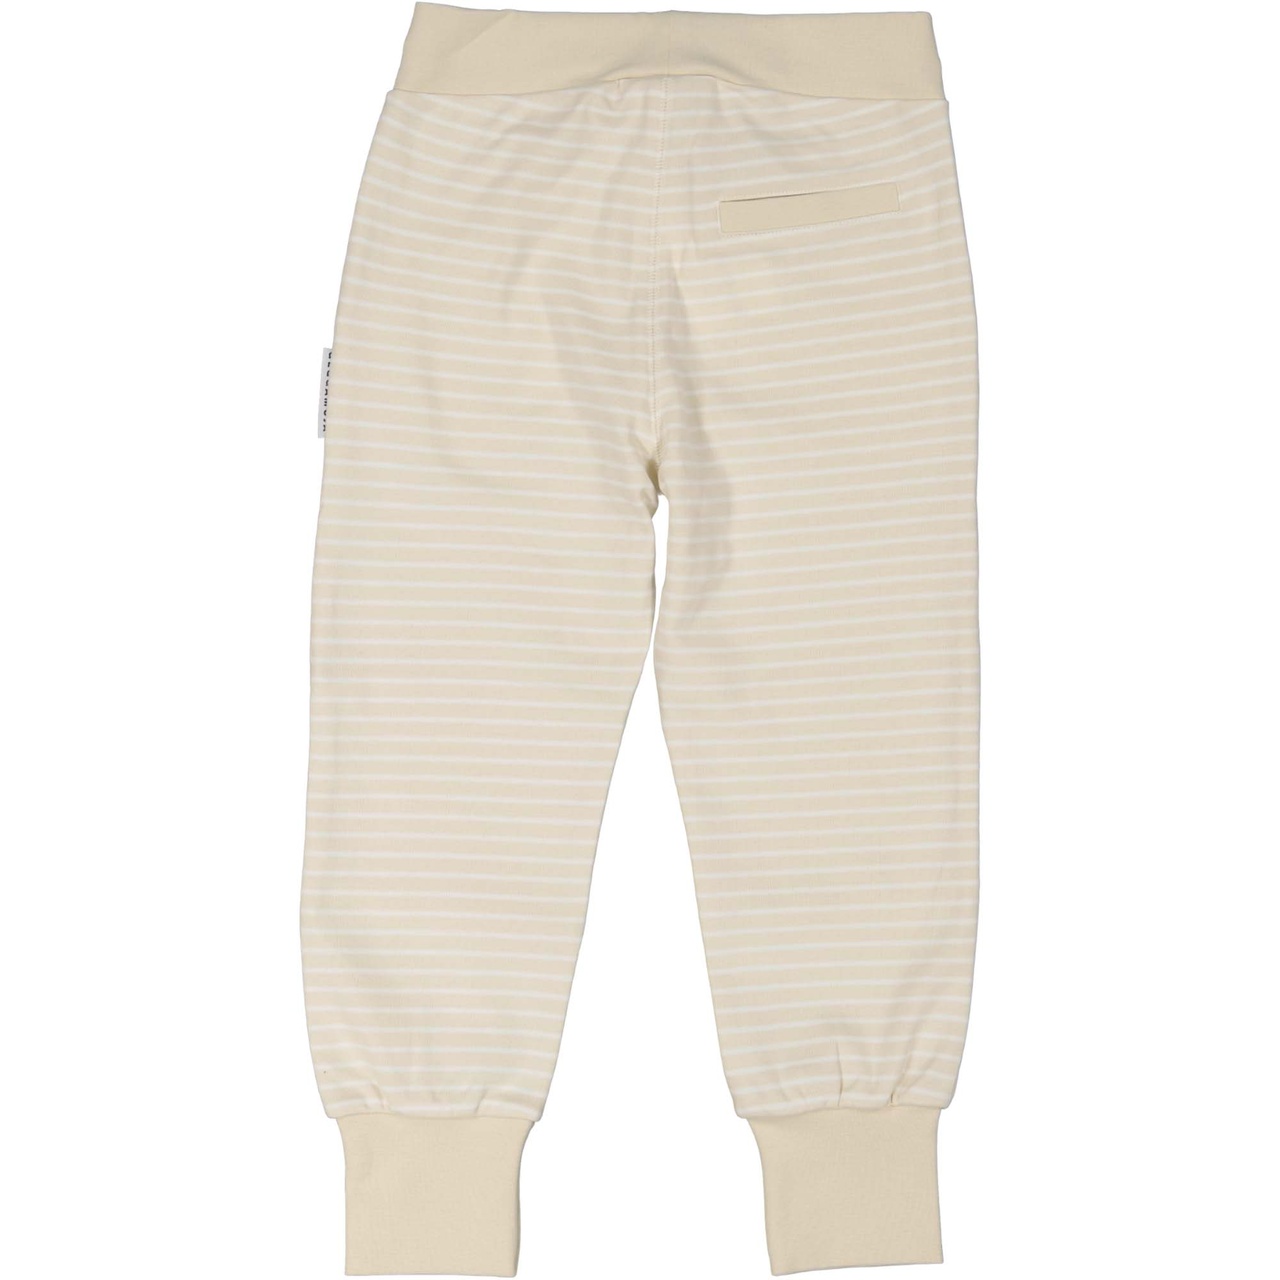 Long pants Beige/white 110/116